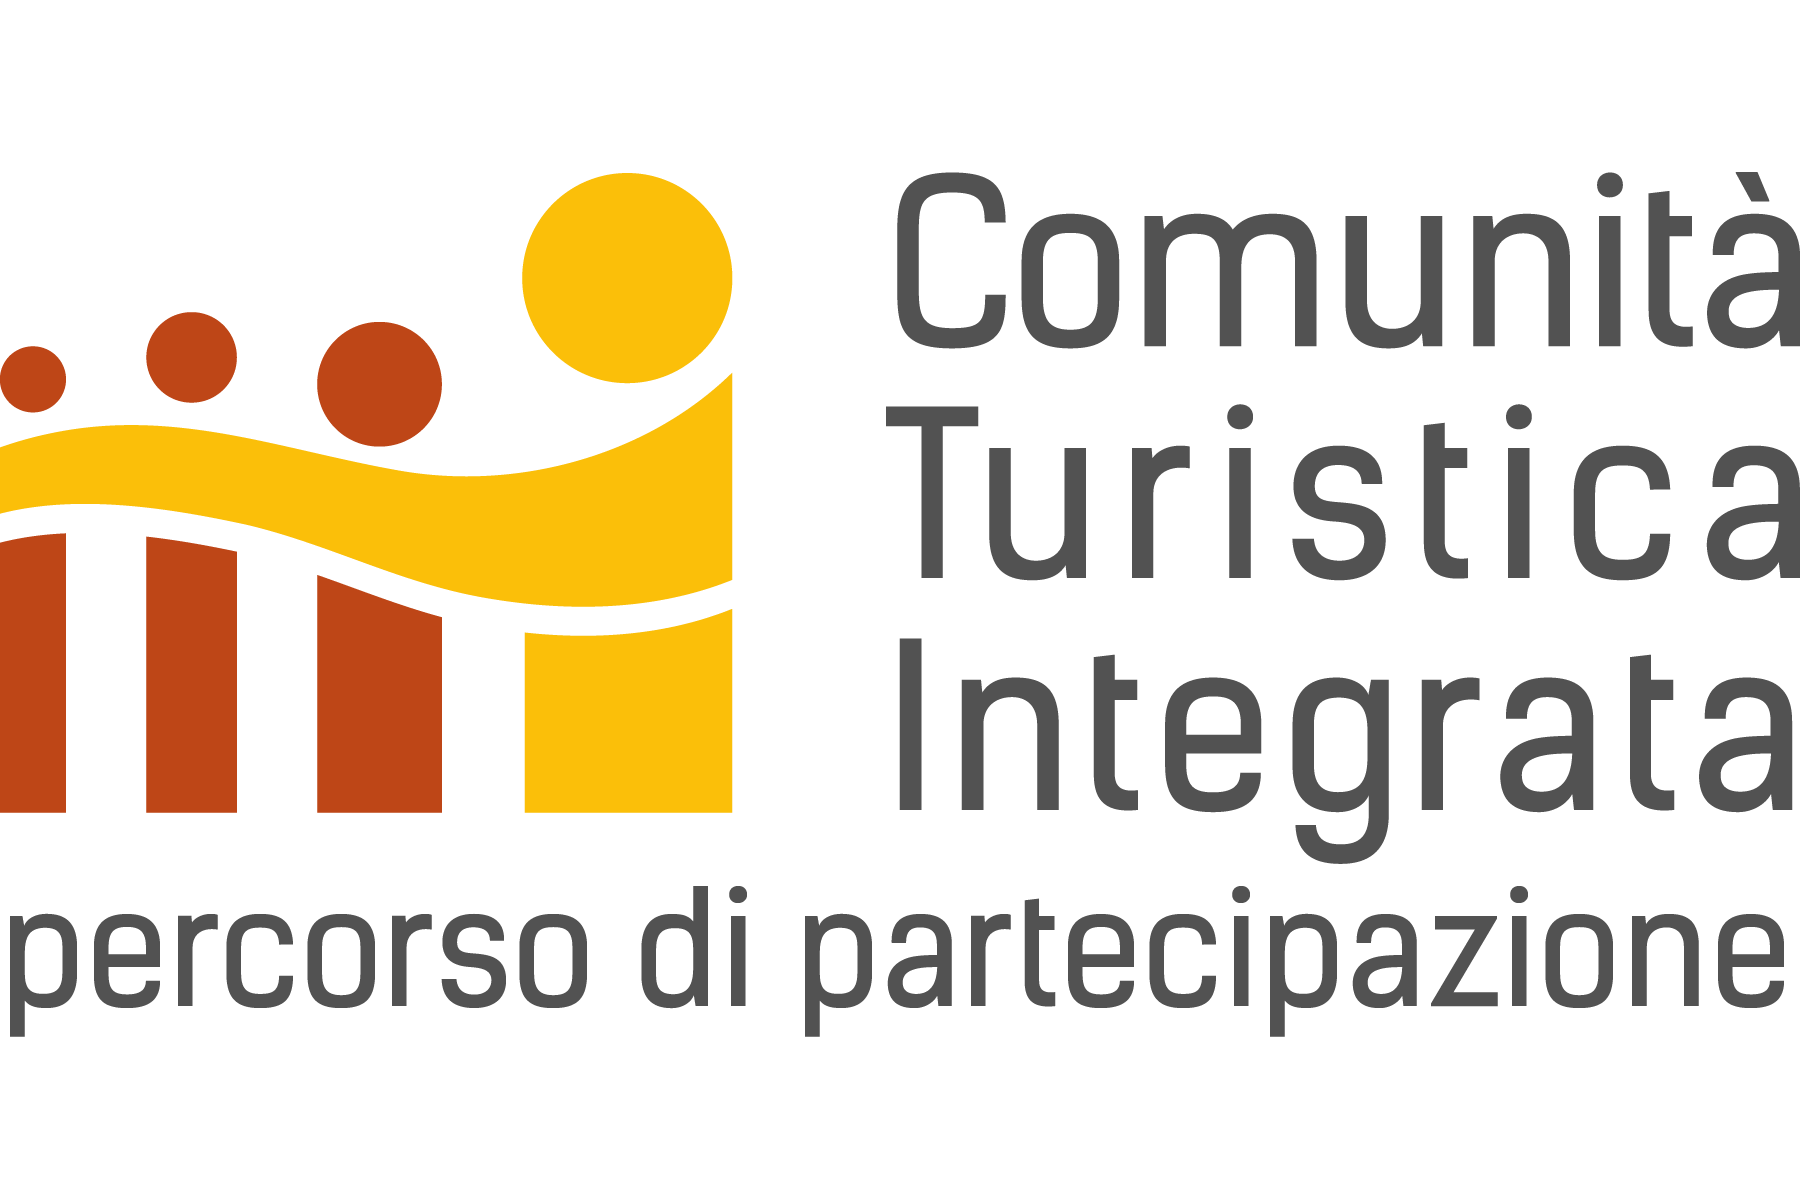 Comunità turistica logo.png